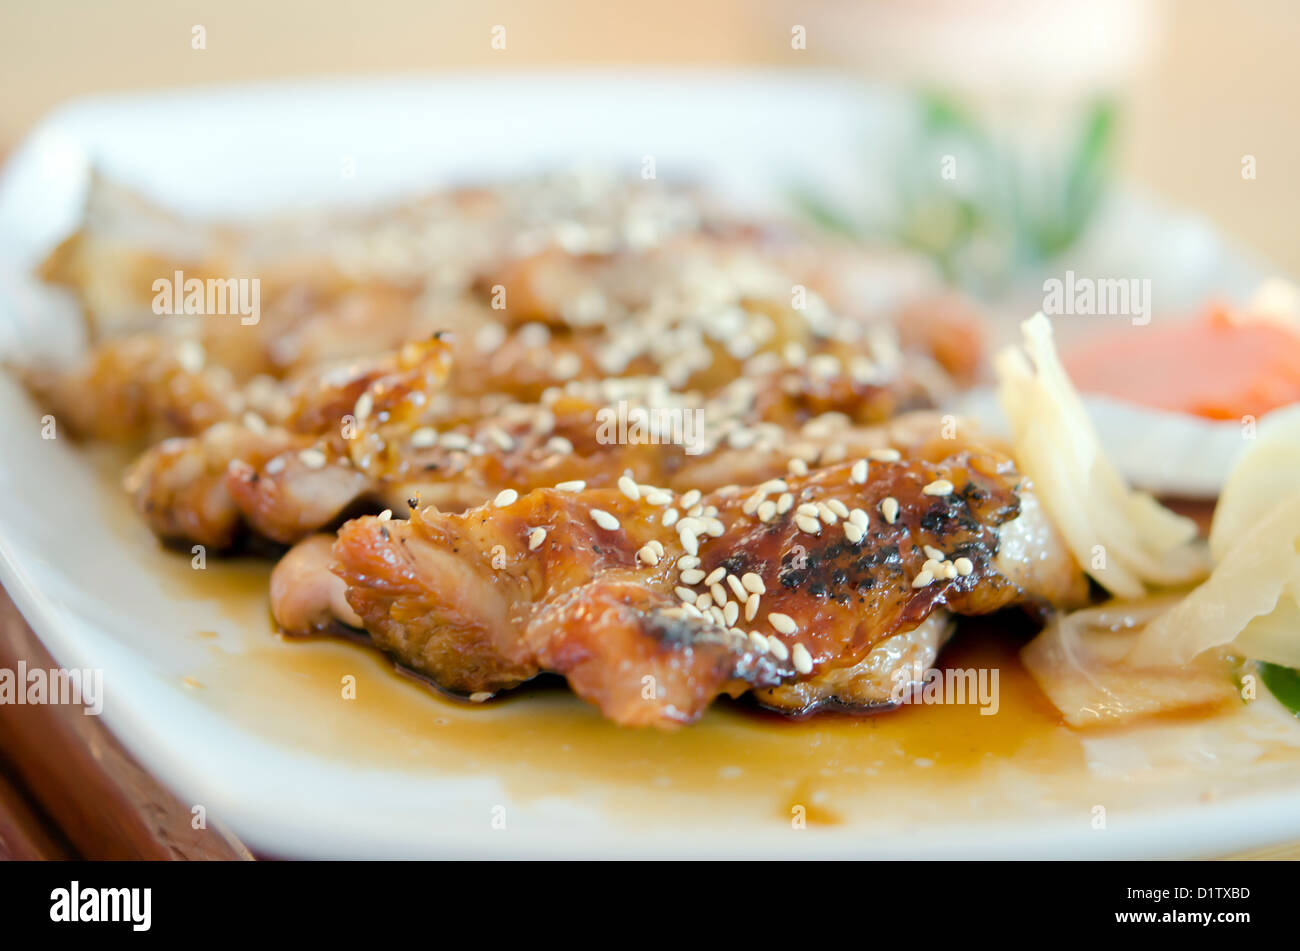 Teriyaki Chicken on plate, Japanese style Food Stock Photo